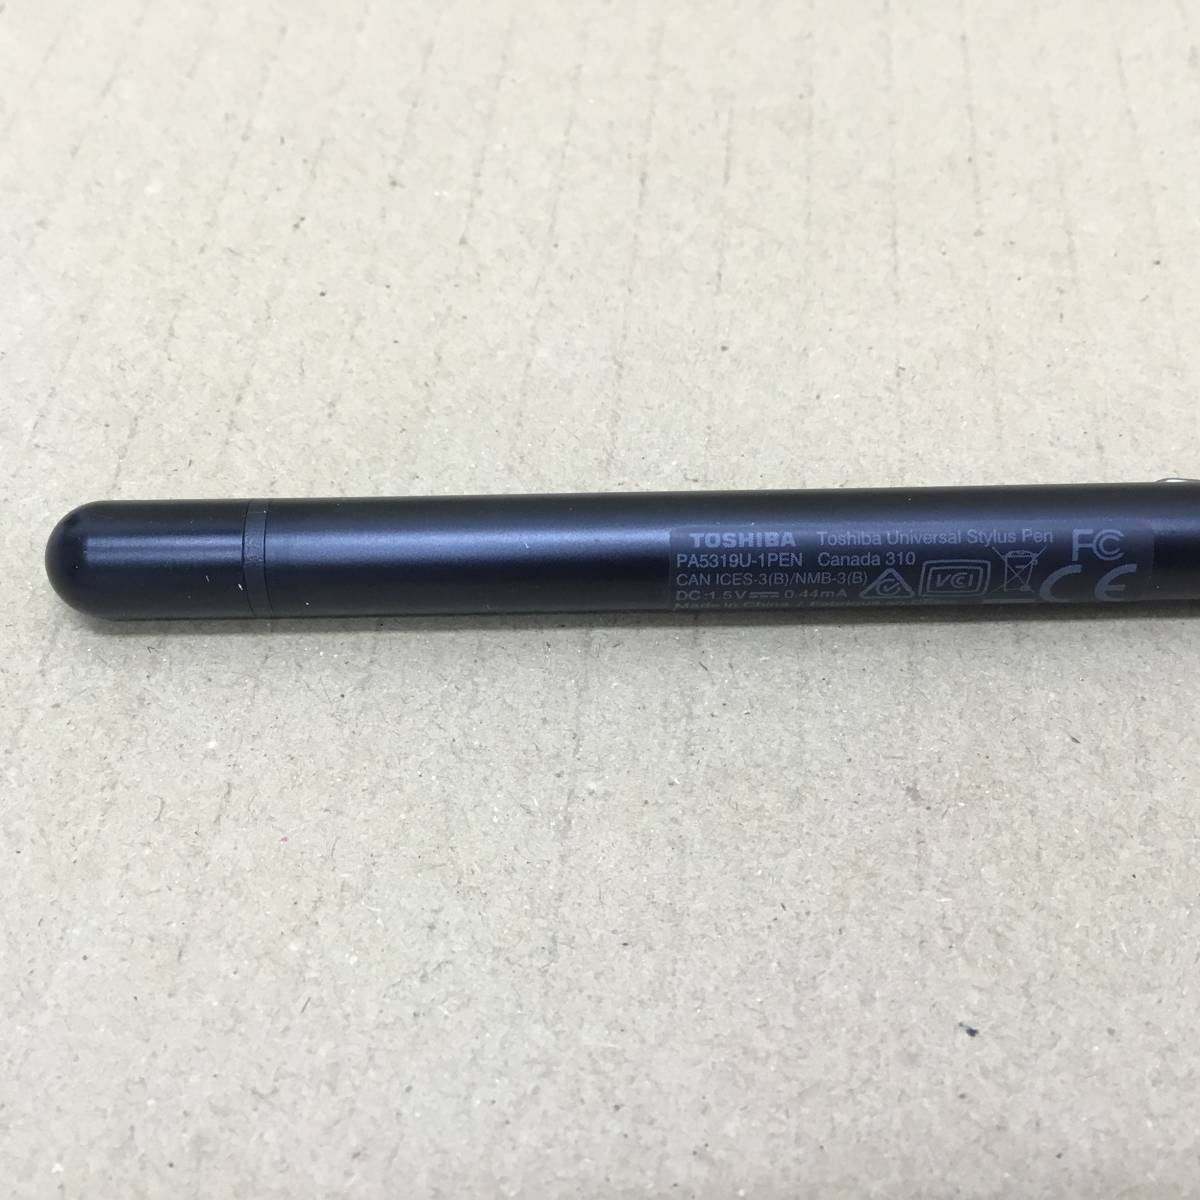 [2310107884-2] unused goods Toshiba dynabook VZ82/VZ72/VZ62/VZ42/V82/VC72/V62/V42 for PADPN004 correspondence touch pen PA5319U-1PEN with battery 